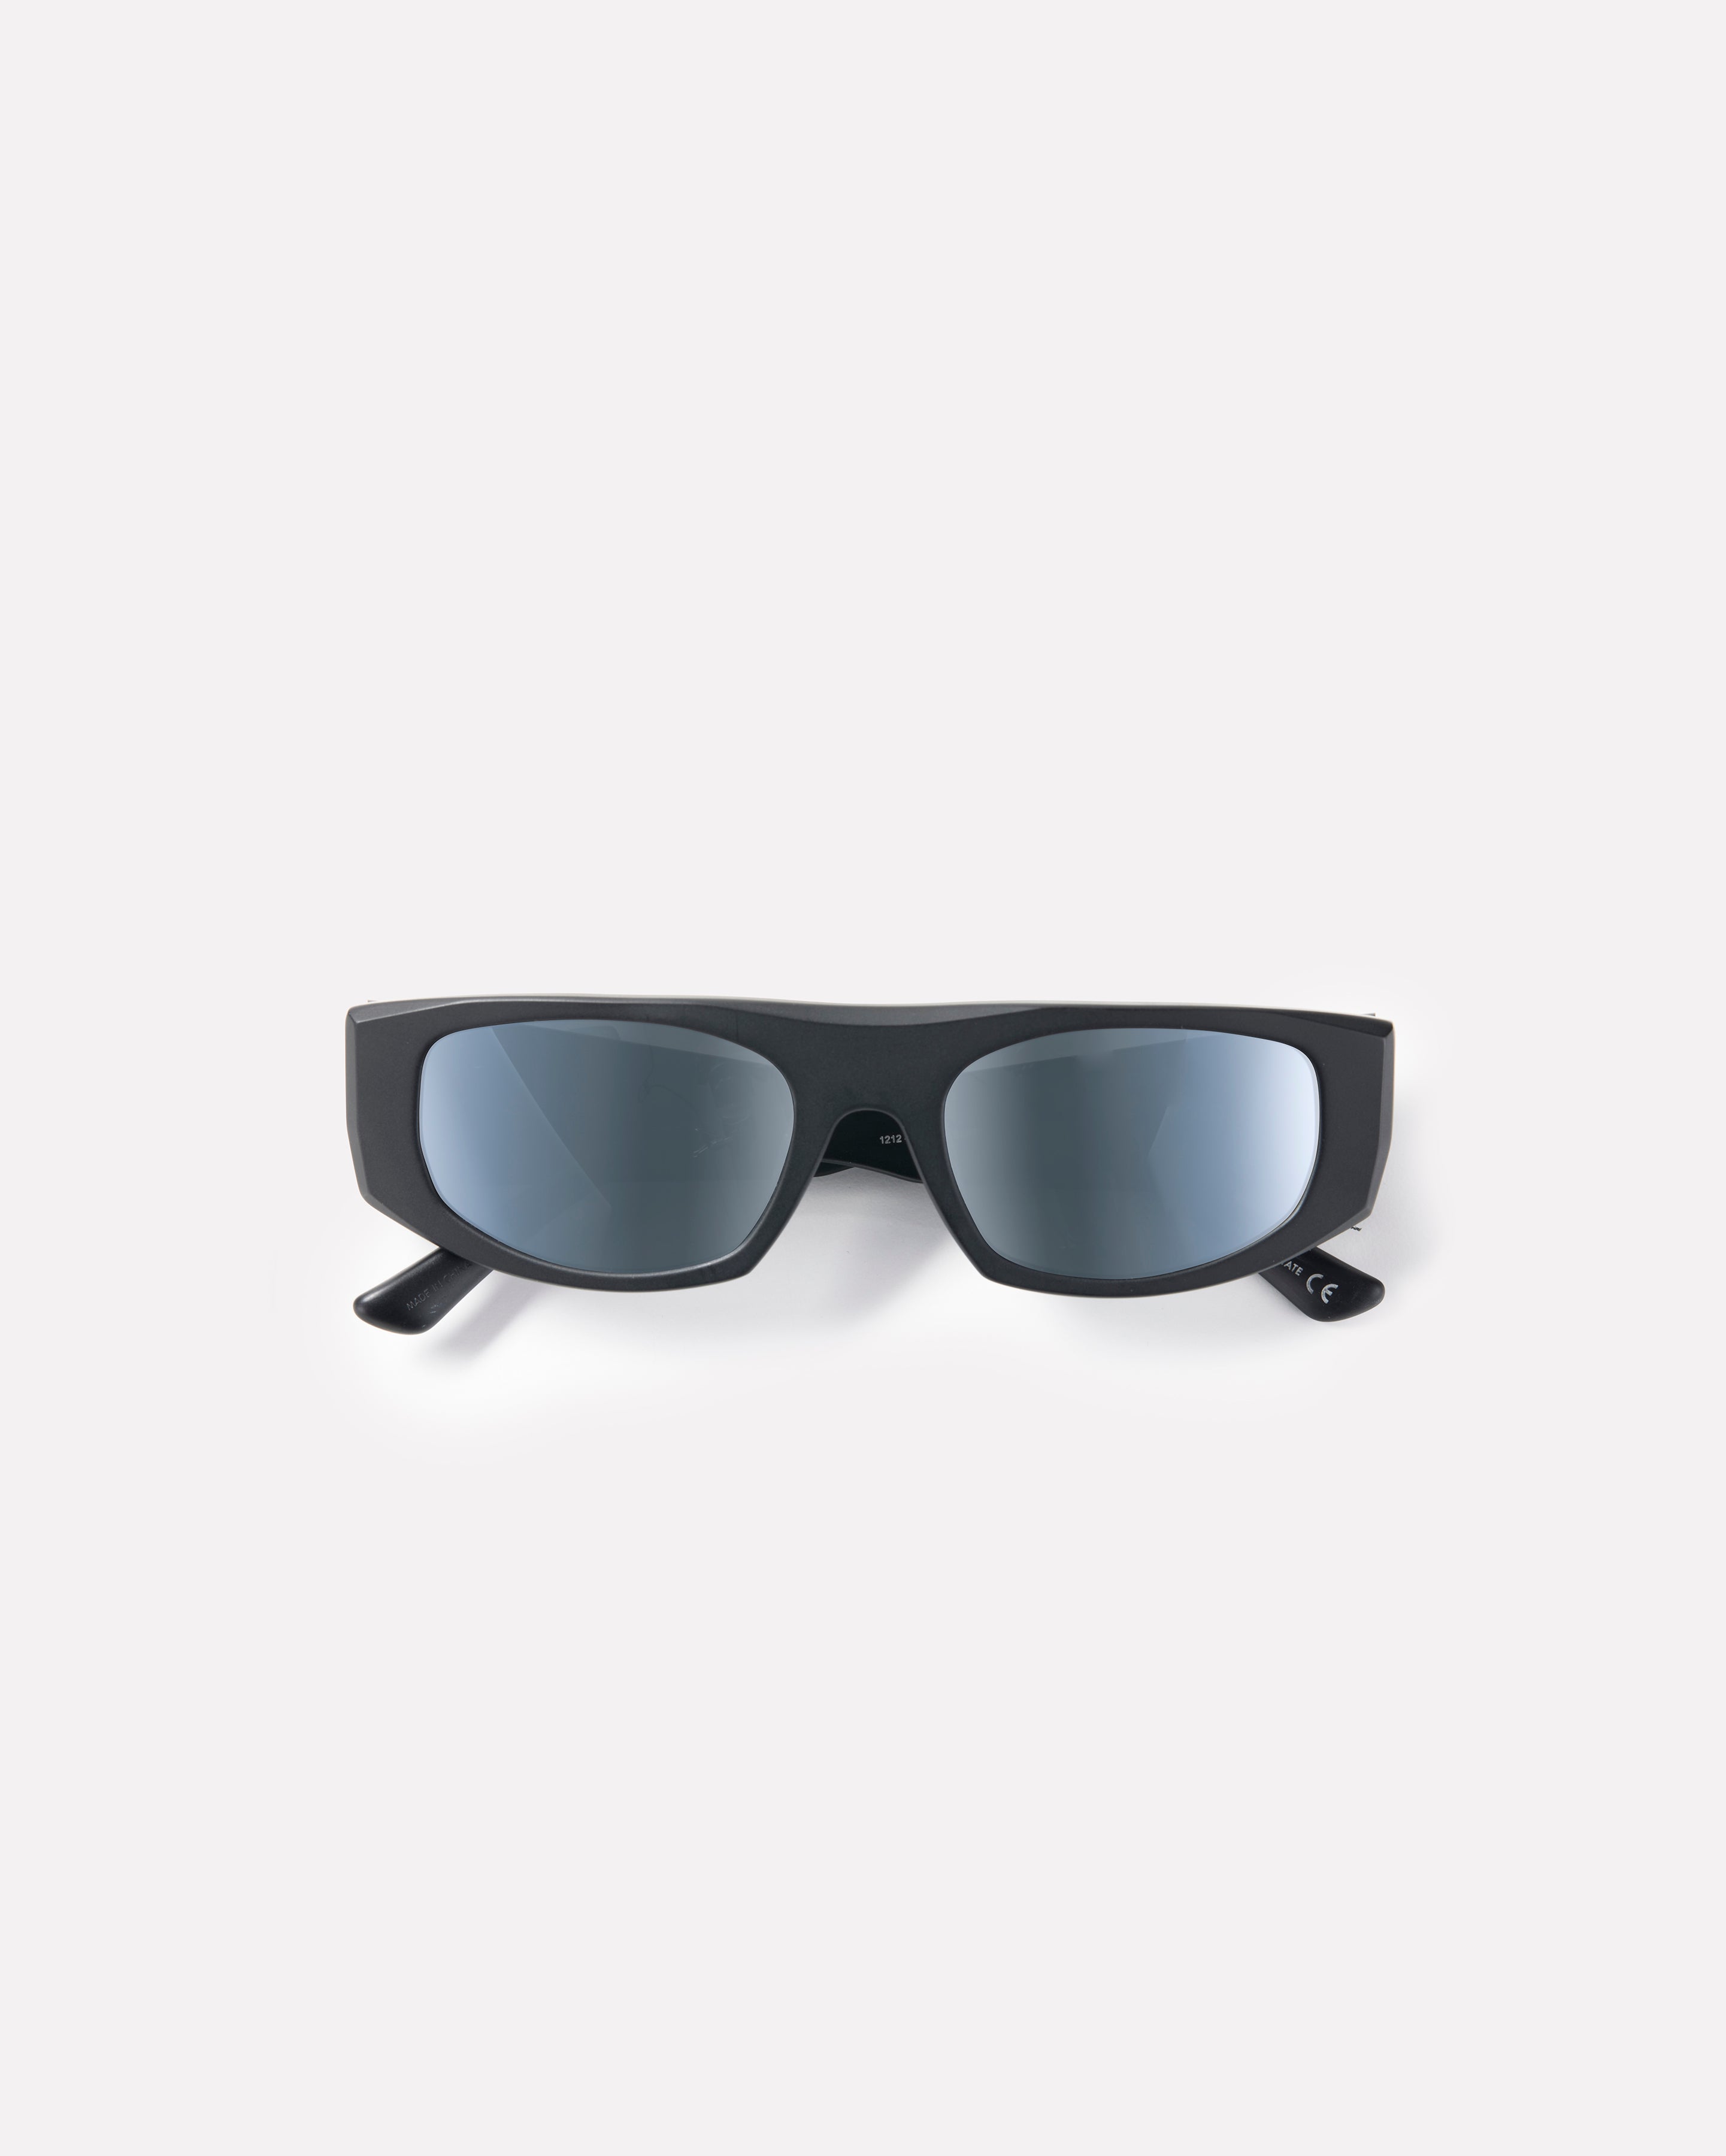 Void - Matte Black / Black Iridium Polarized - Sunglasses - EPOKHE EYEWEAR